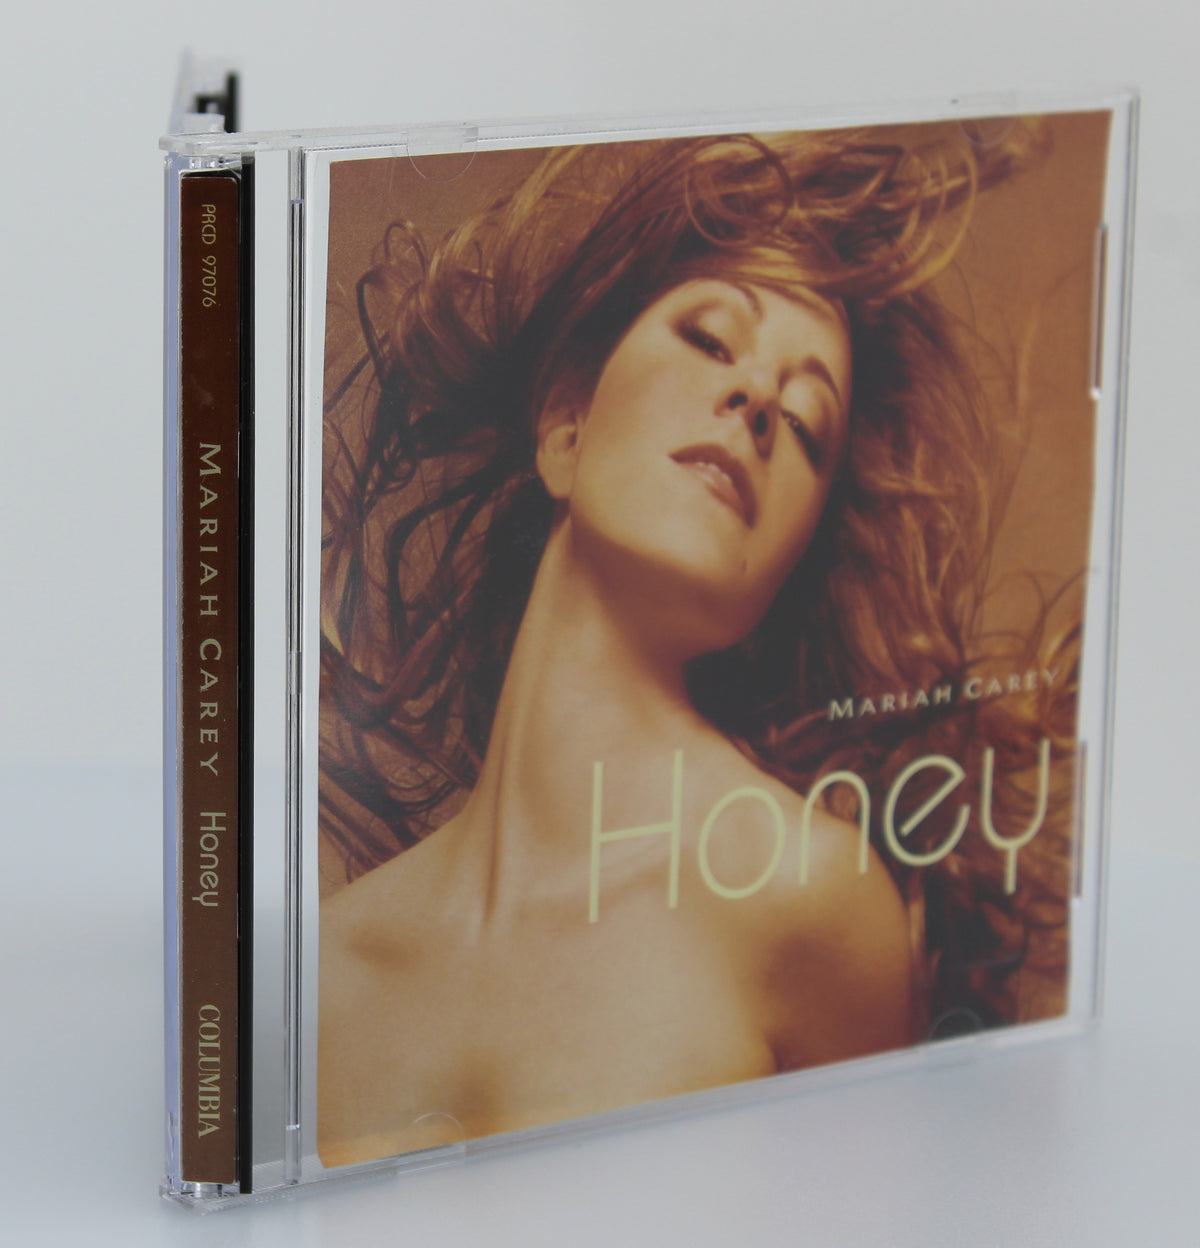 Mariah Carey ‎– Honey, CD PROMO, Mexico 1997